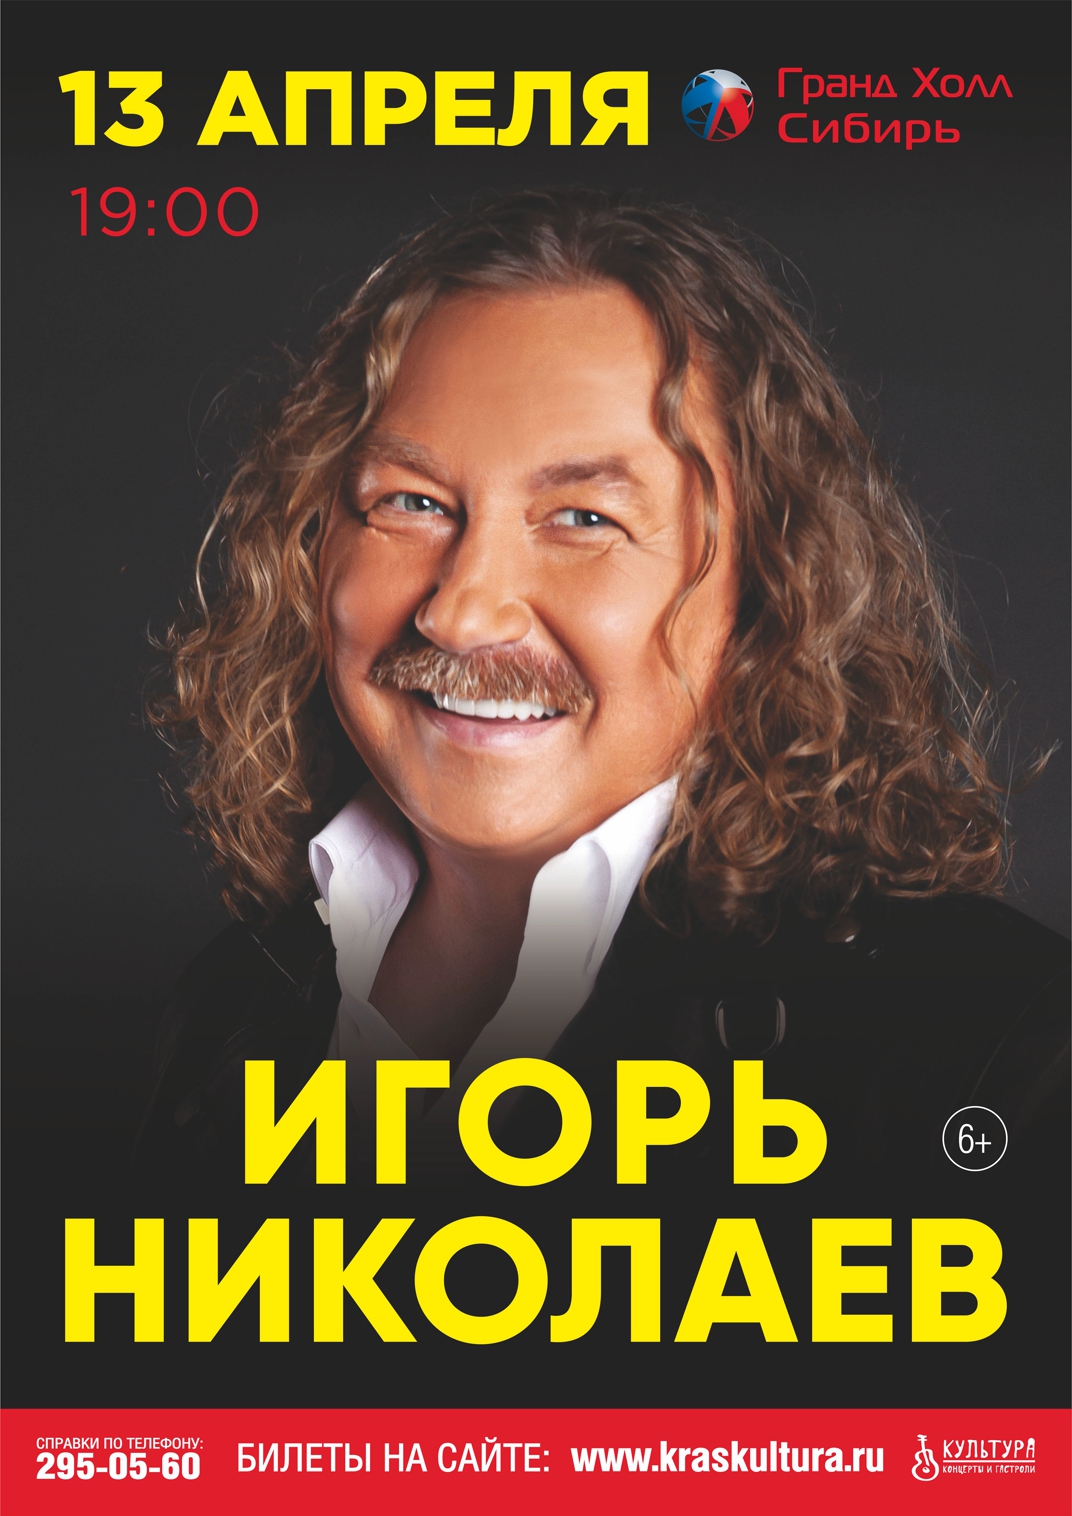 Концерт Игоря Николаева 13 апреля в Гранд Холл Сибирь!